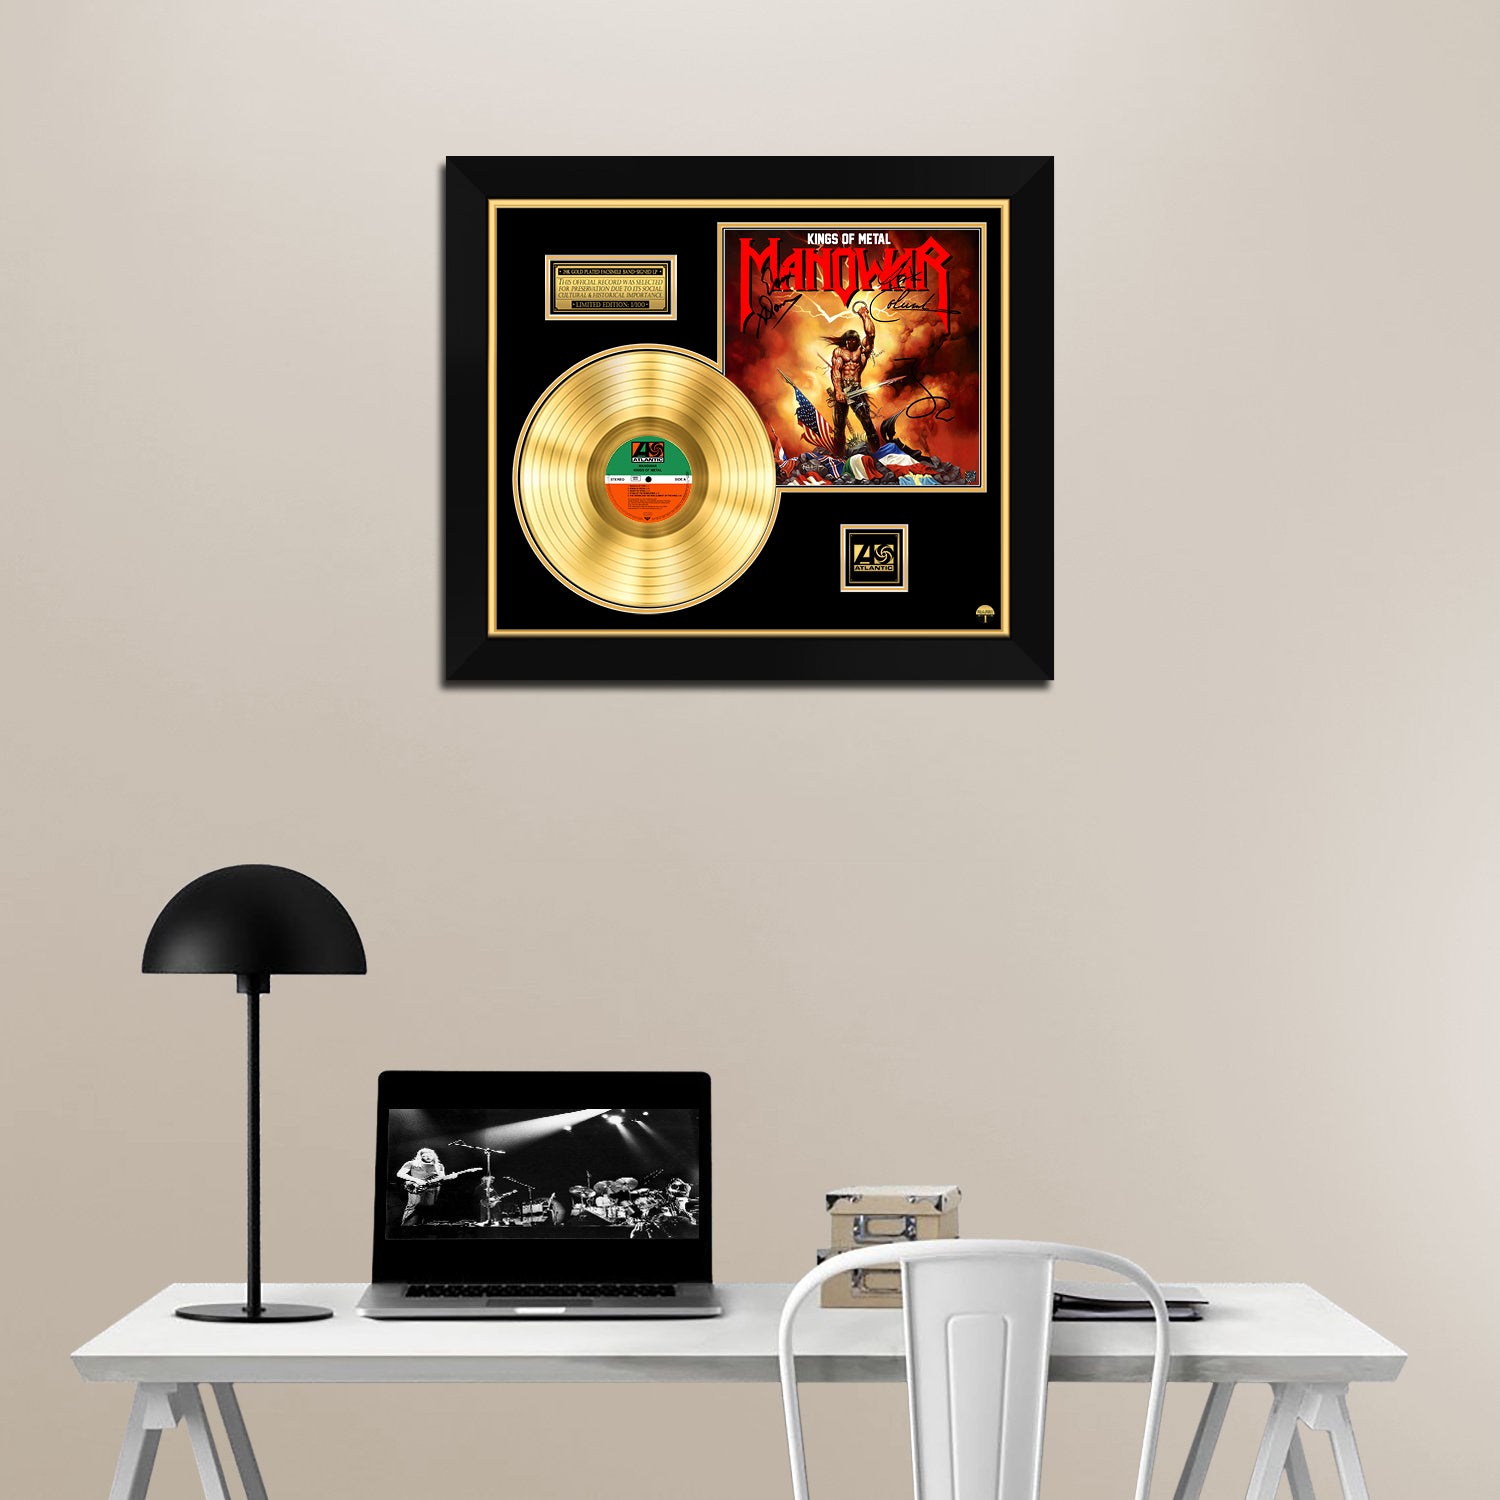 Manowar - Kings of Metal Gold LP Limited Signature Edition Custom 